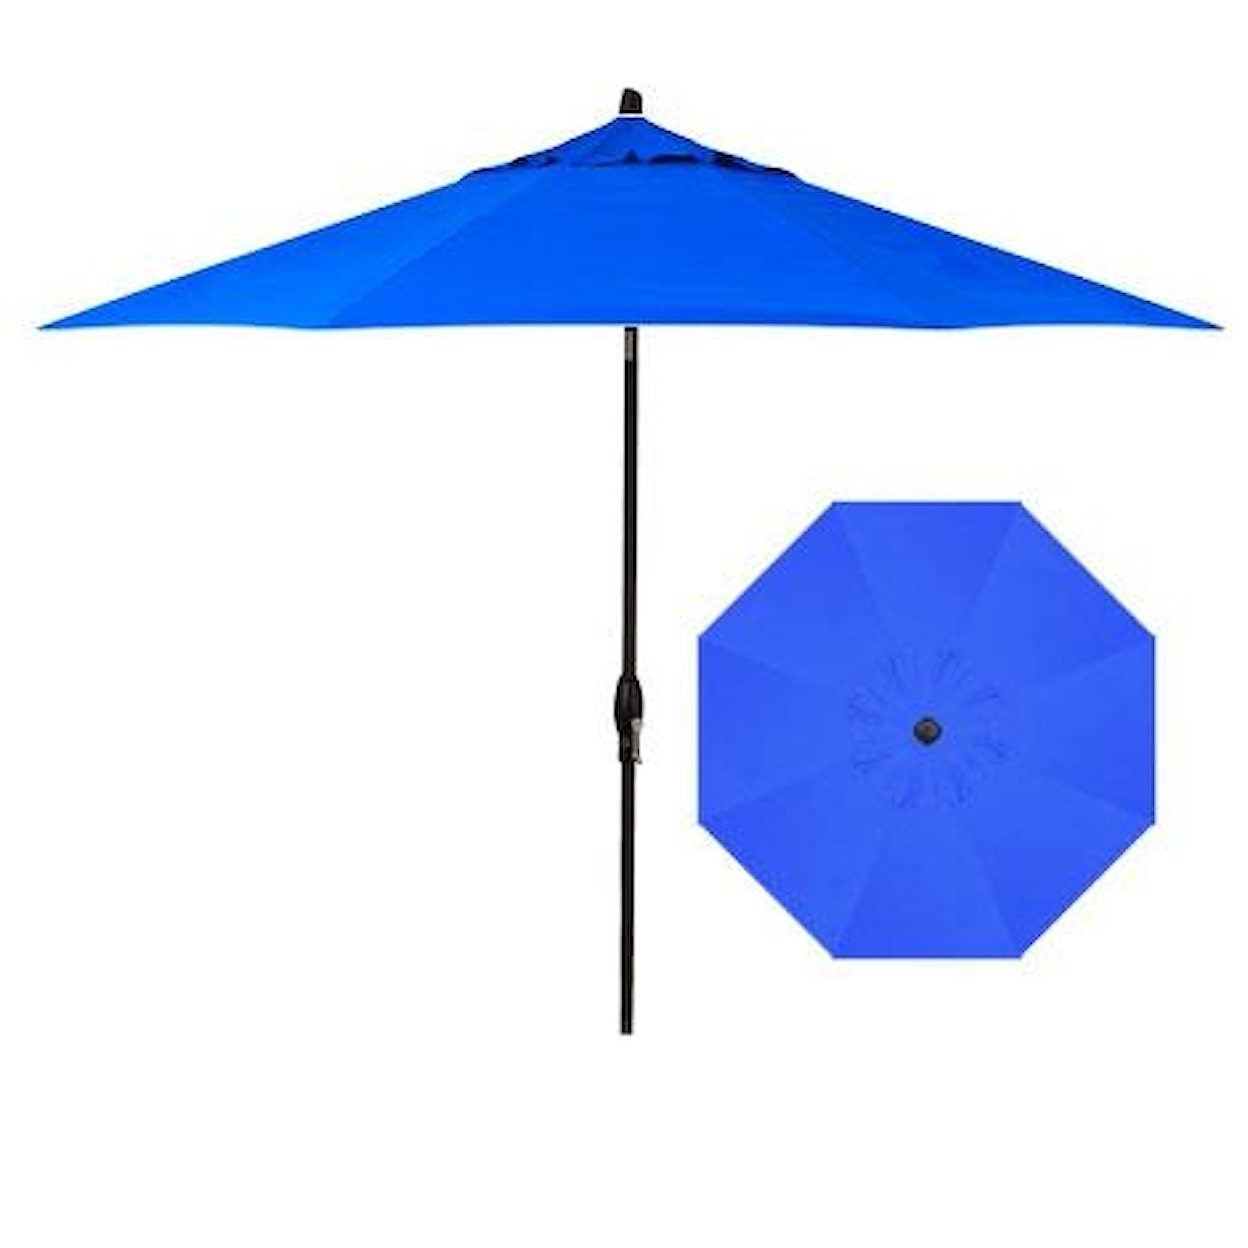 Treasure Garden Market Umbrellas 9' Auto Market Tilt Umbrella